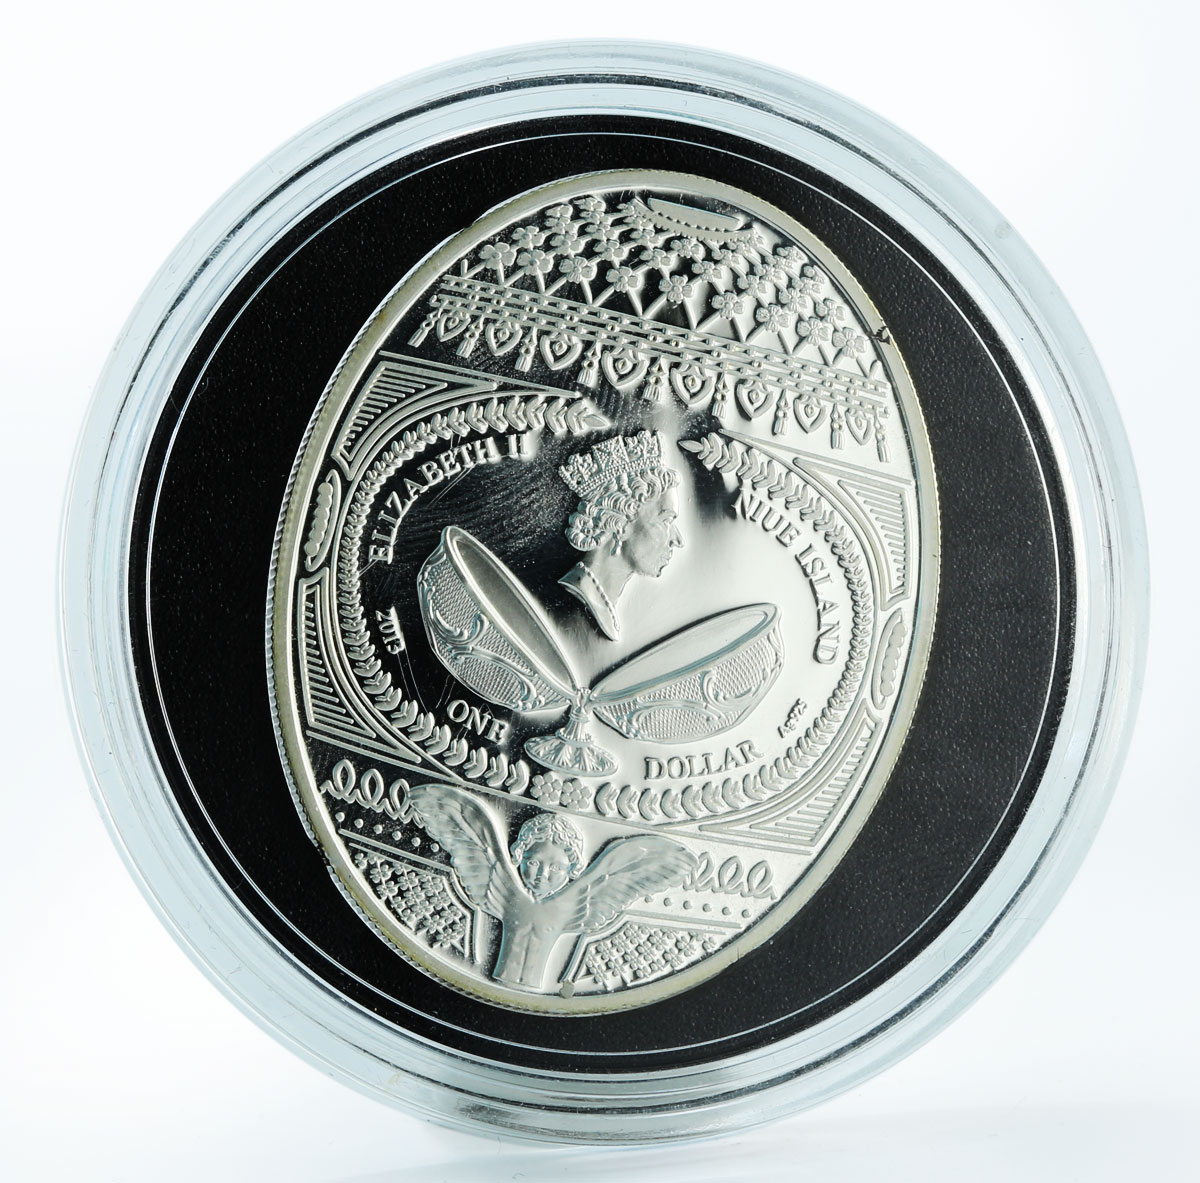 Niue 1 dollar Love tree zircon insert proof silver coin 2013